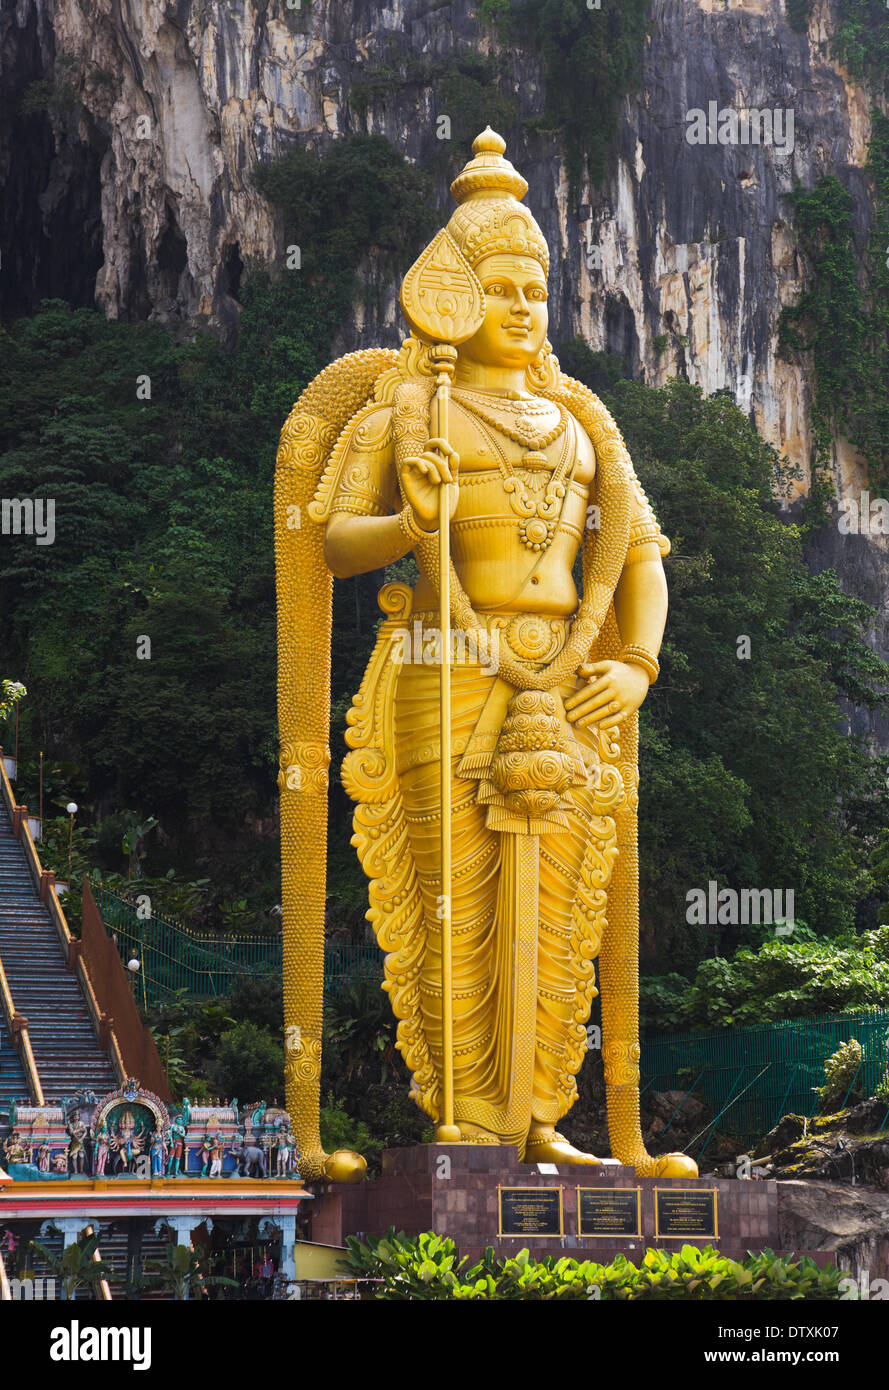 Statue of hindu god Muragan at Batu caves Stock Photo